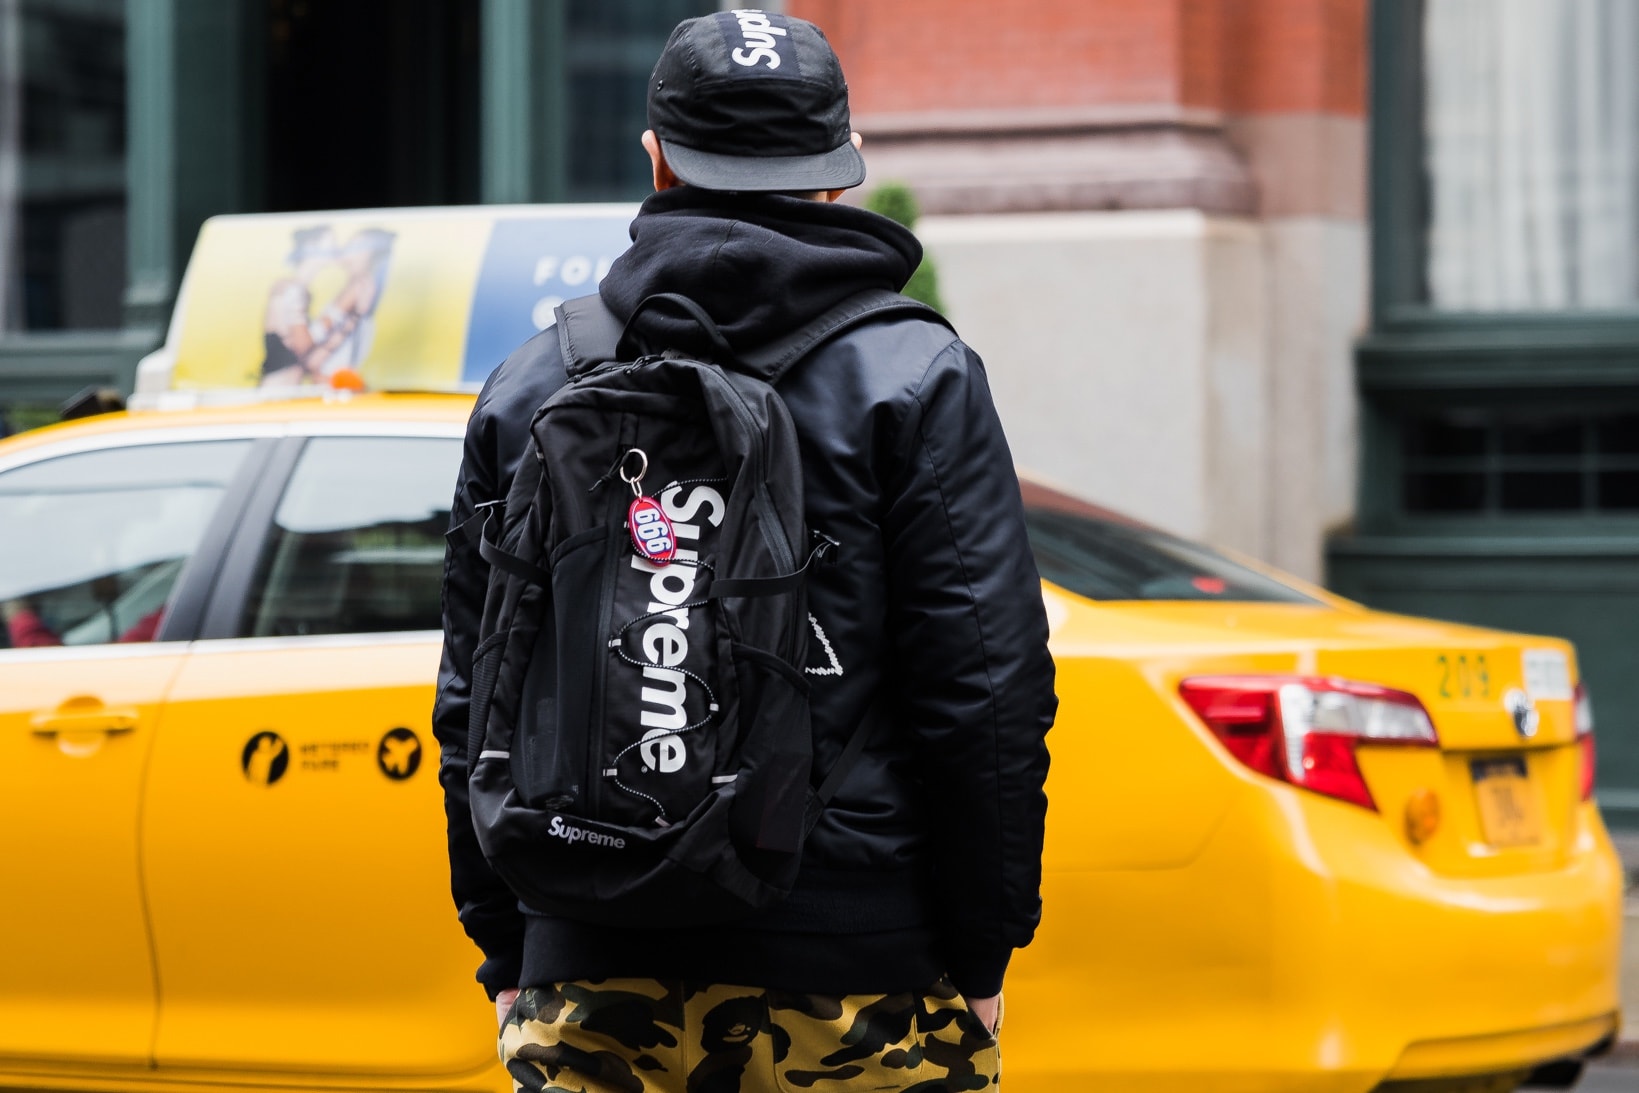 Streetsnaps: Supreme NYC 4/20 Drop